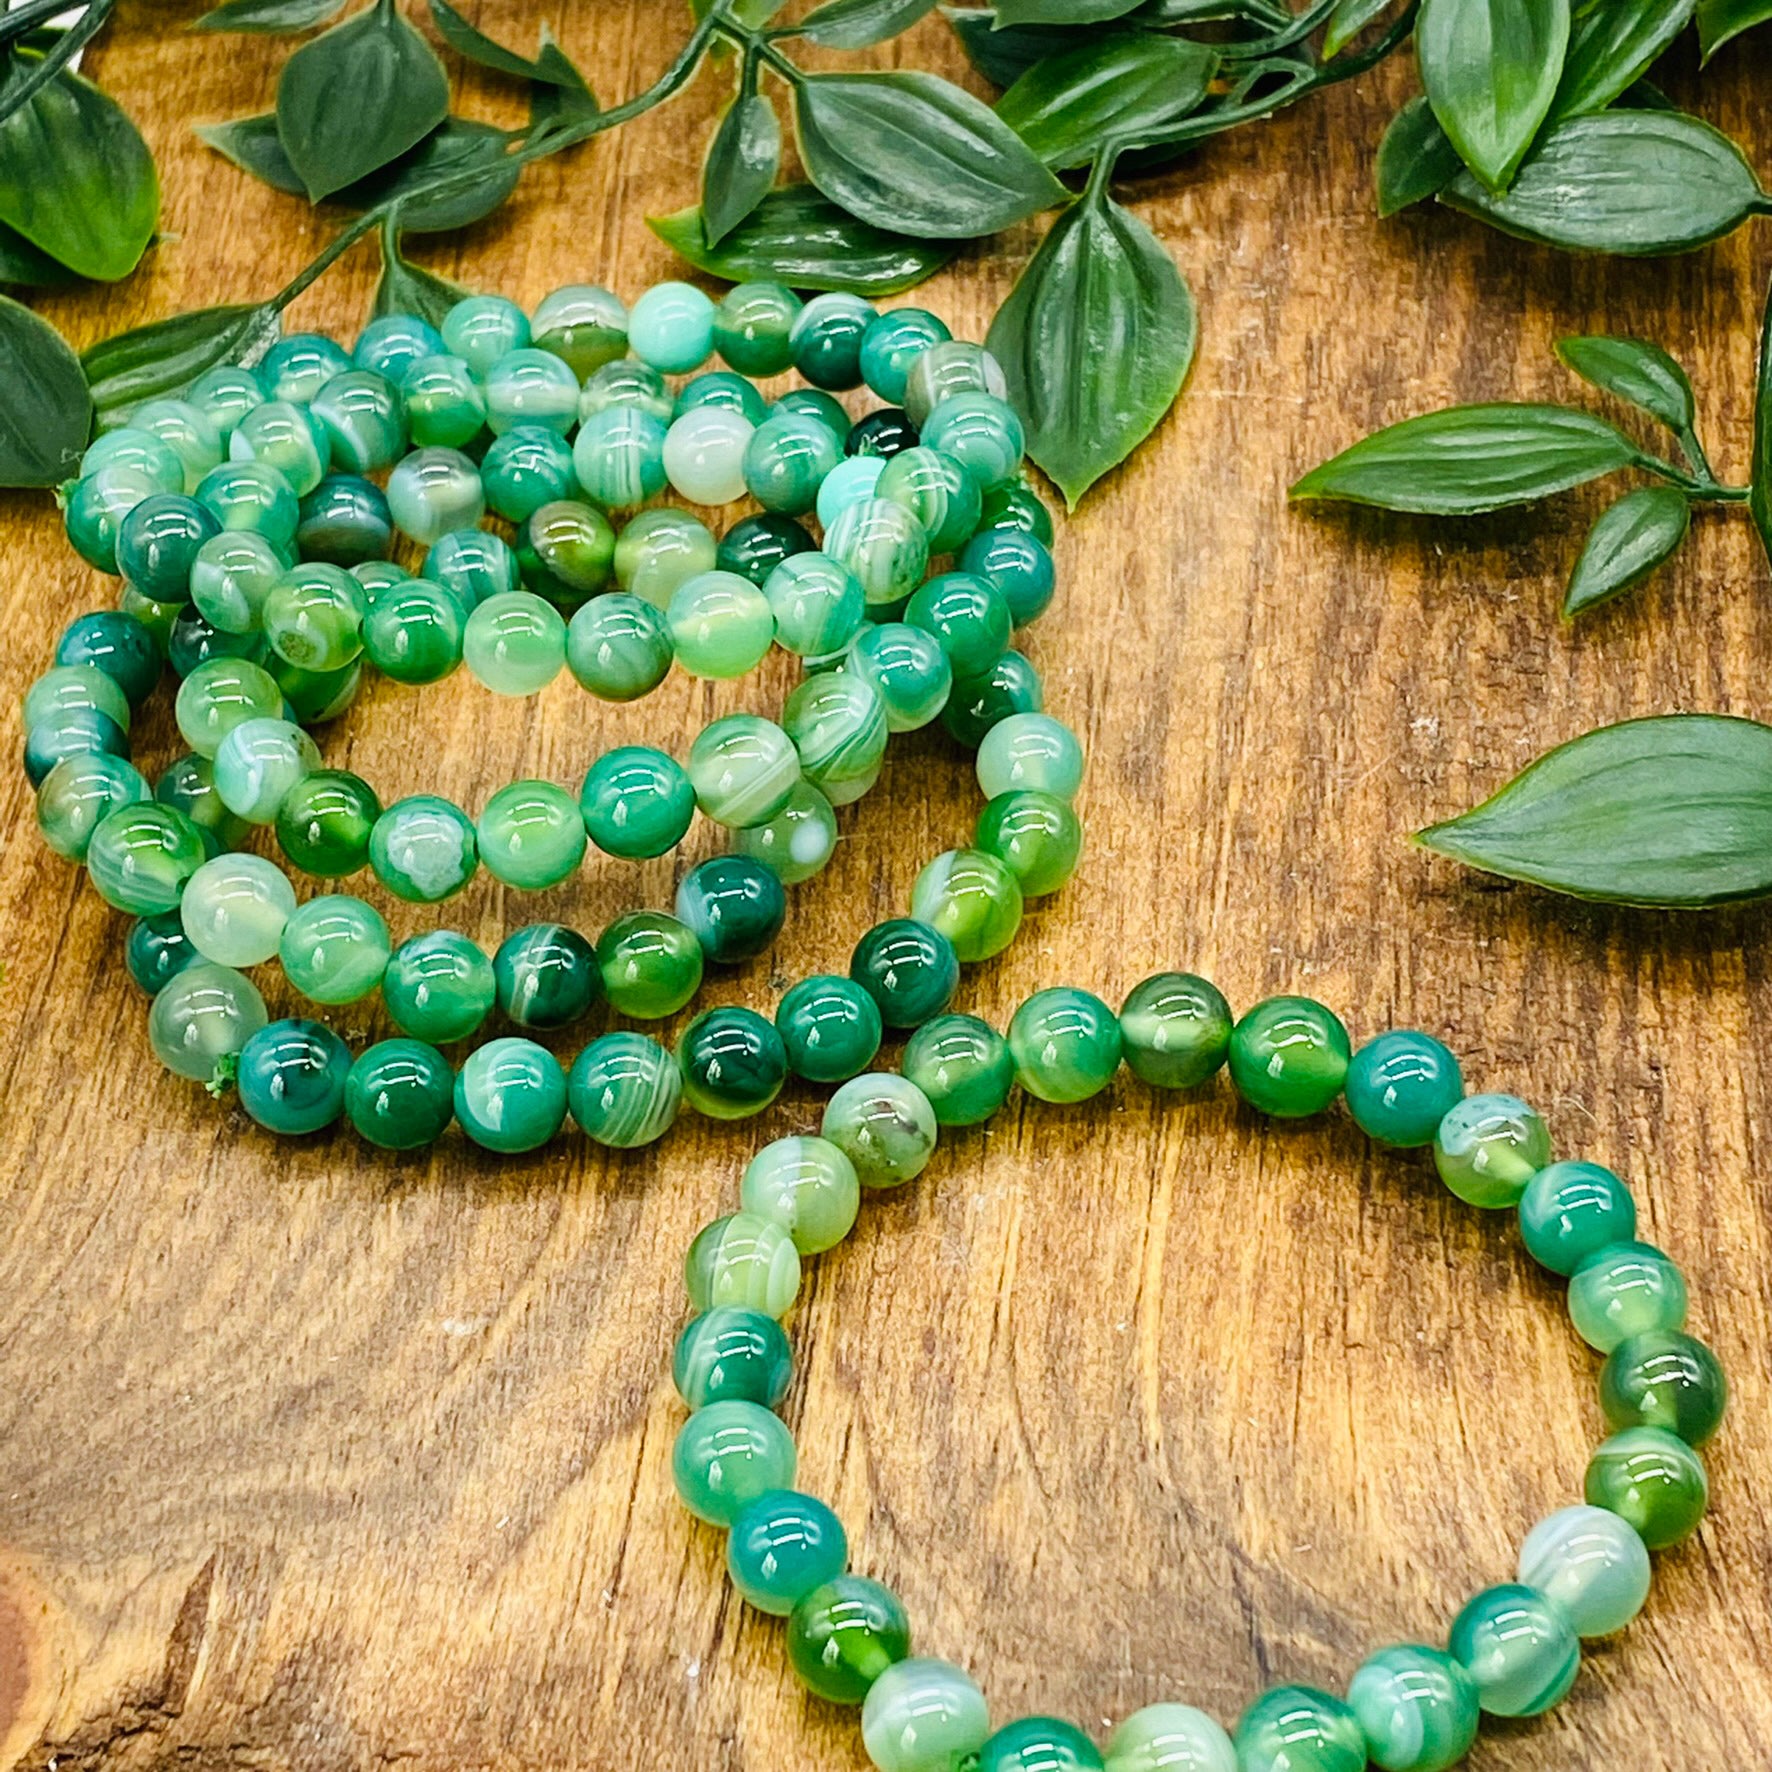  Taozyao Natural Green Jade Bangle Bracelet for Women Girls  Genuine with Certificate丨100% Grade A Jade Handmade Bracelets - Healing